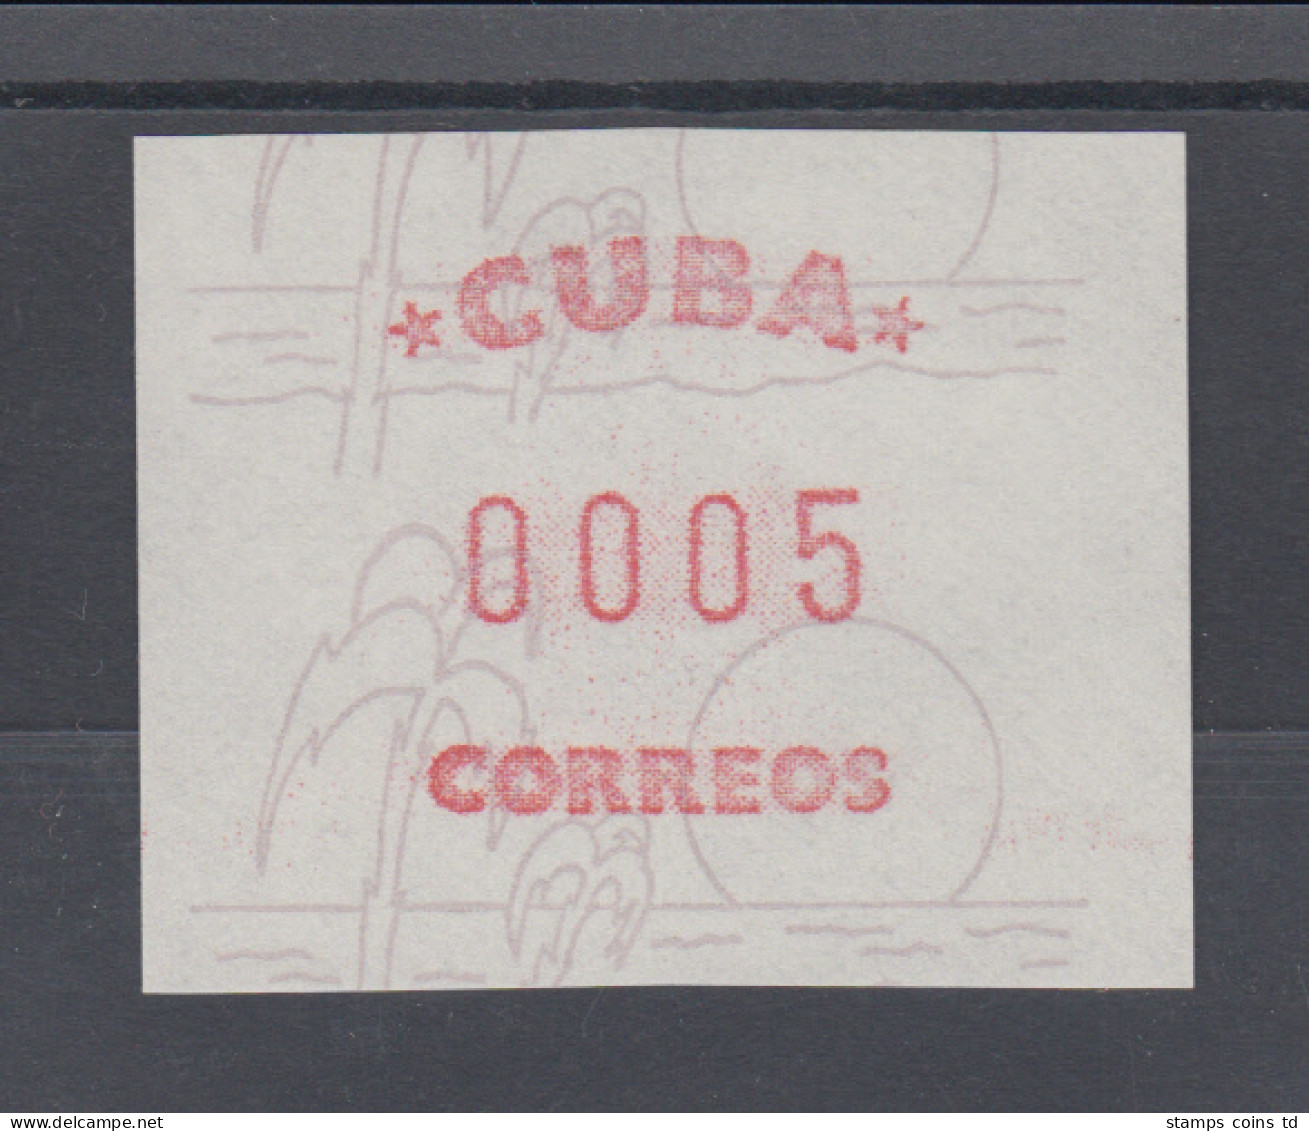 Cuba / Kuba  ATM Freimarke Briefmarkenbörse Sindelfingen 1984, Mi.-Nr. 3 ** - Vignettes D'affranchissement (Frama)